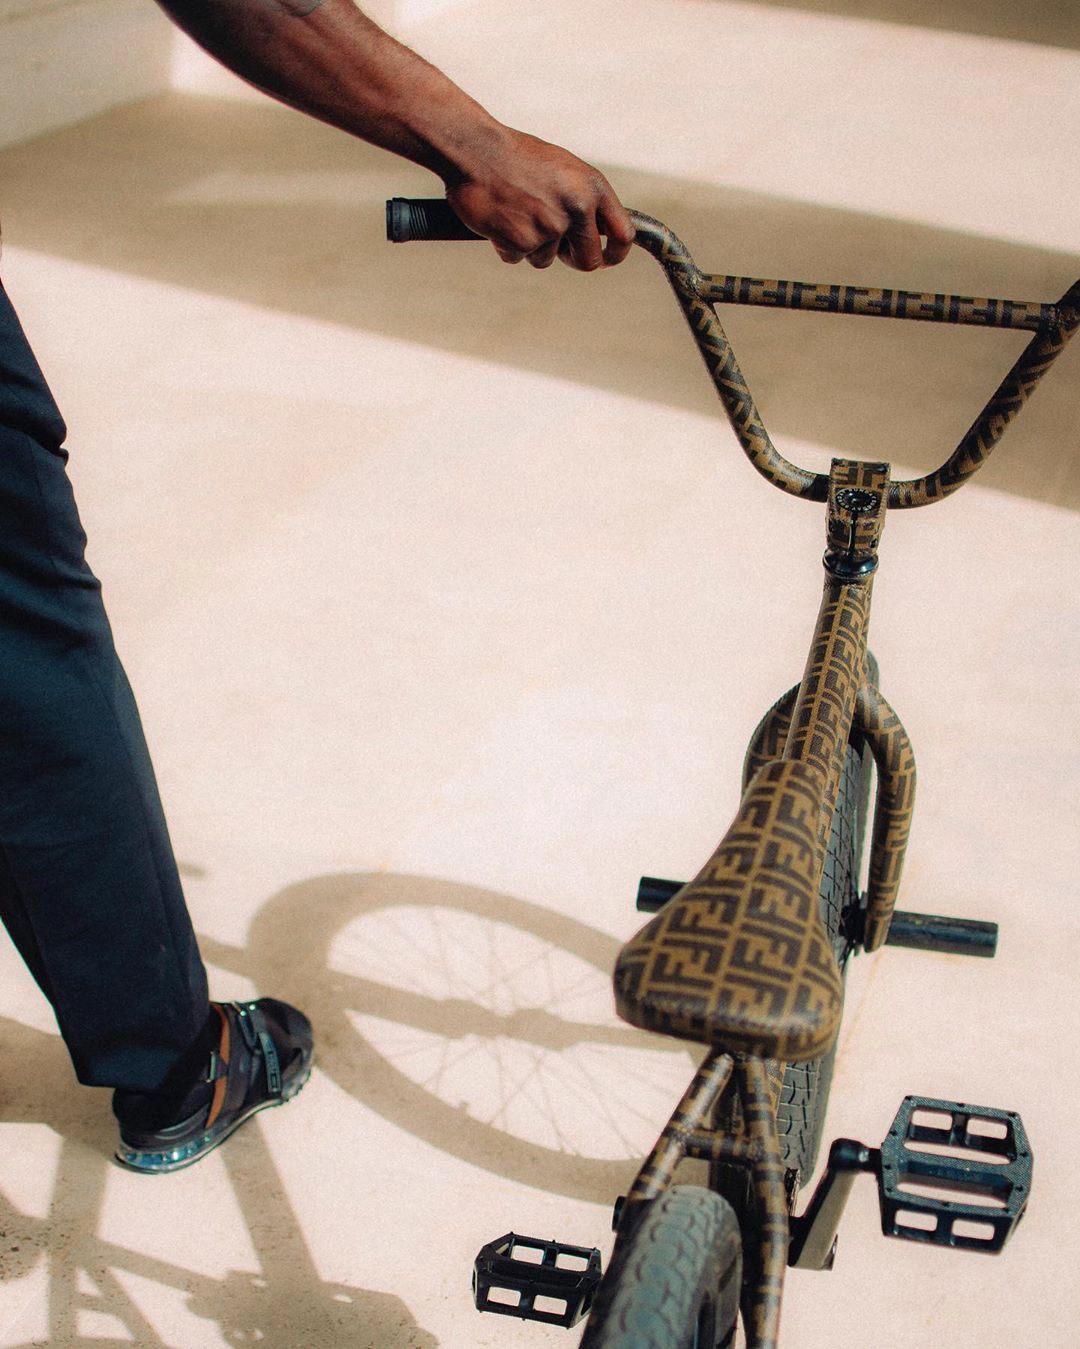 Fendi Designed a Bike with BMX Star Nigel Sylvester – Robb Report